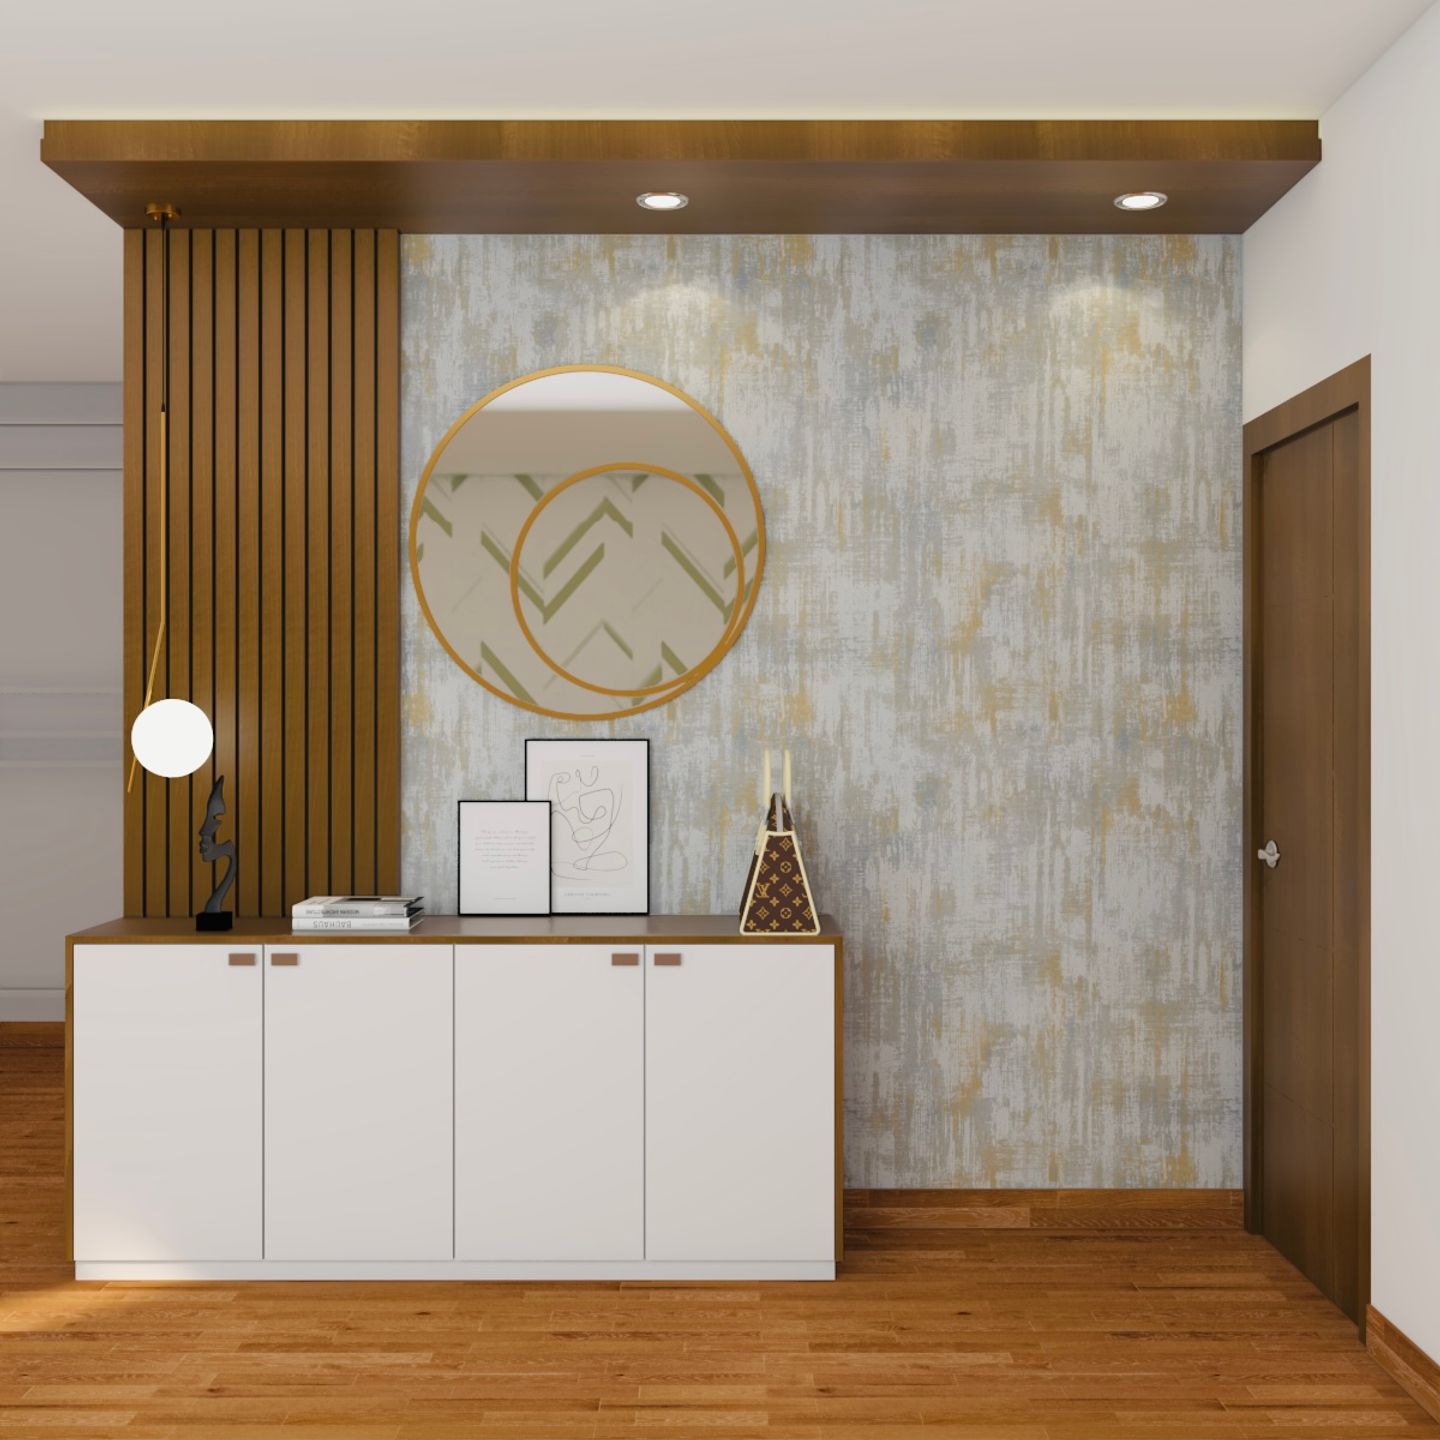 Wooden Foyer Design With Mirror - Livspace